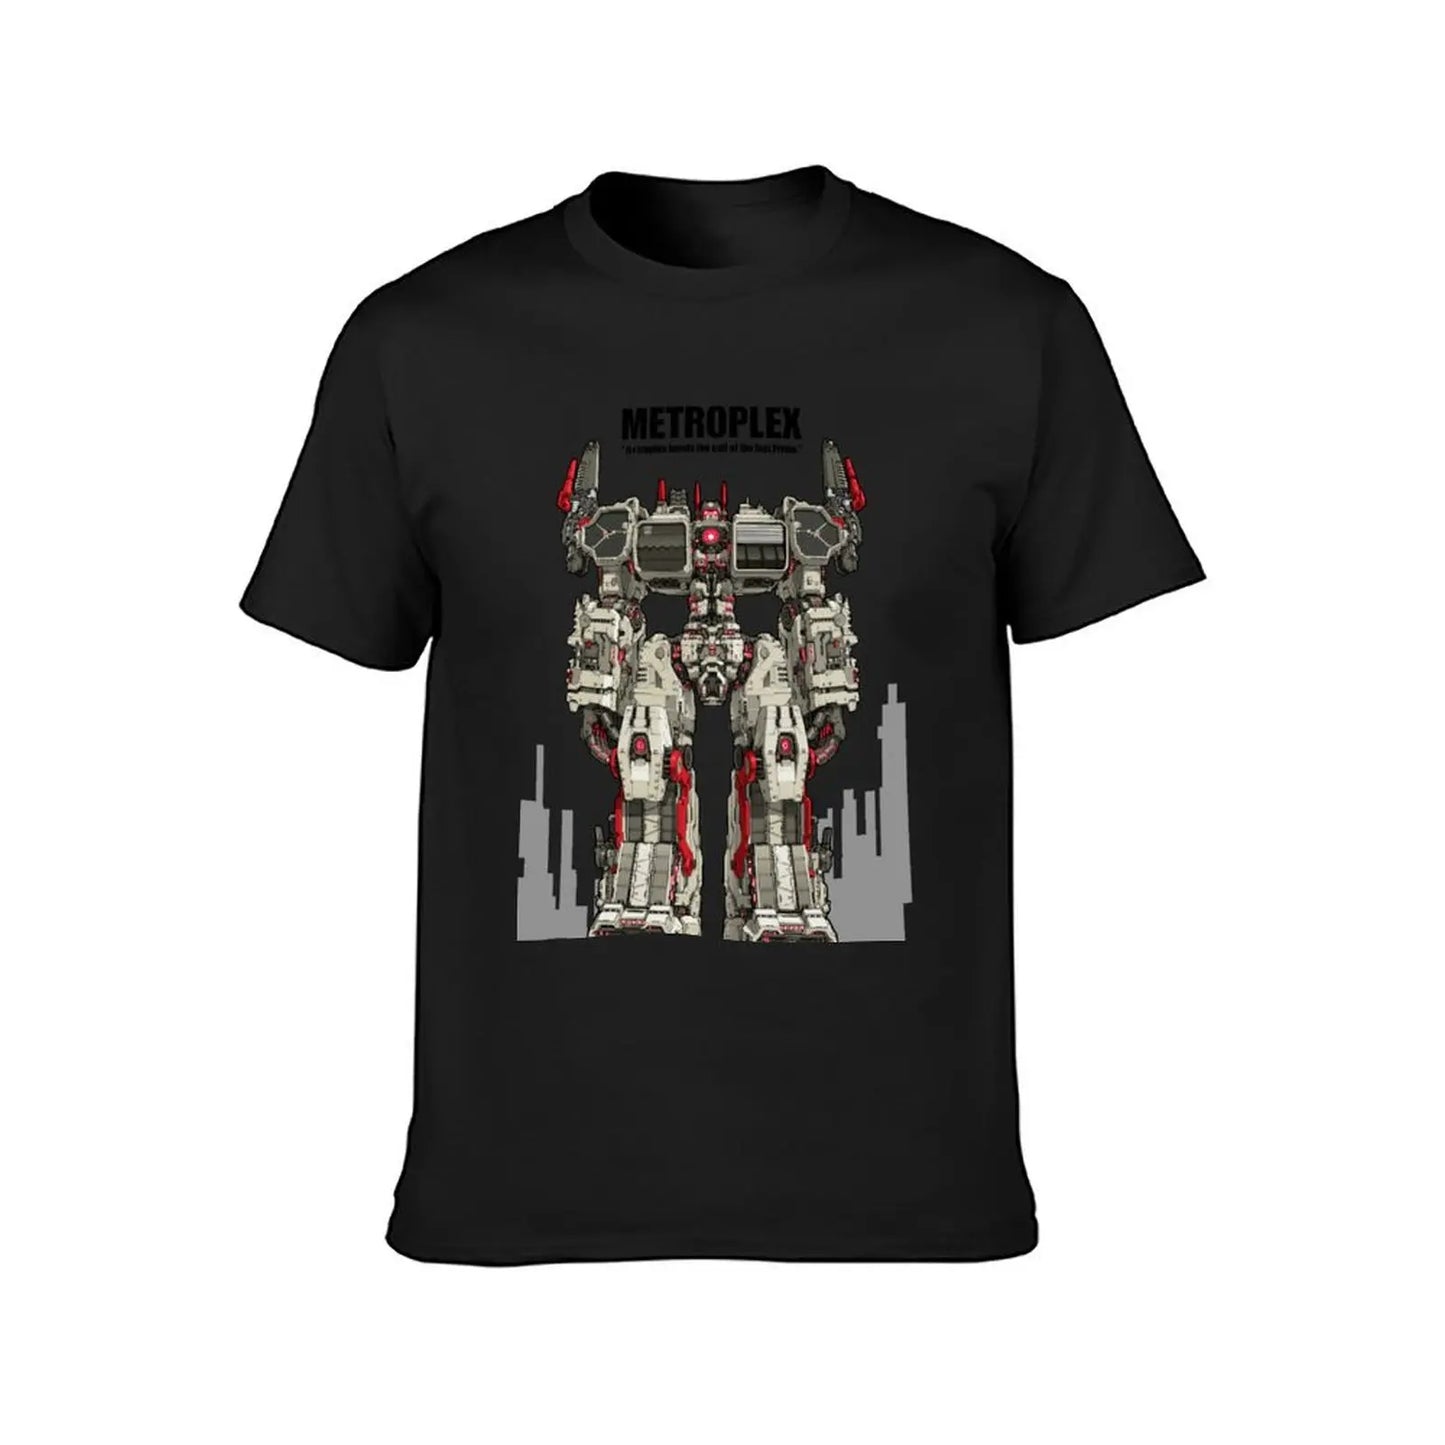 Metroplex_Transformer Citybot camiseta anime oversizeds hombres grandes y altos camisetas